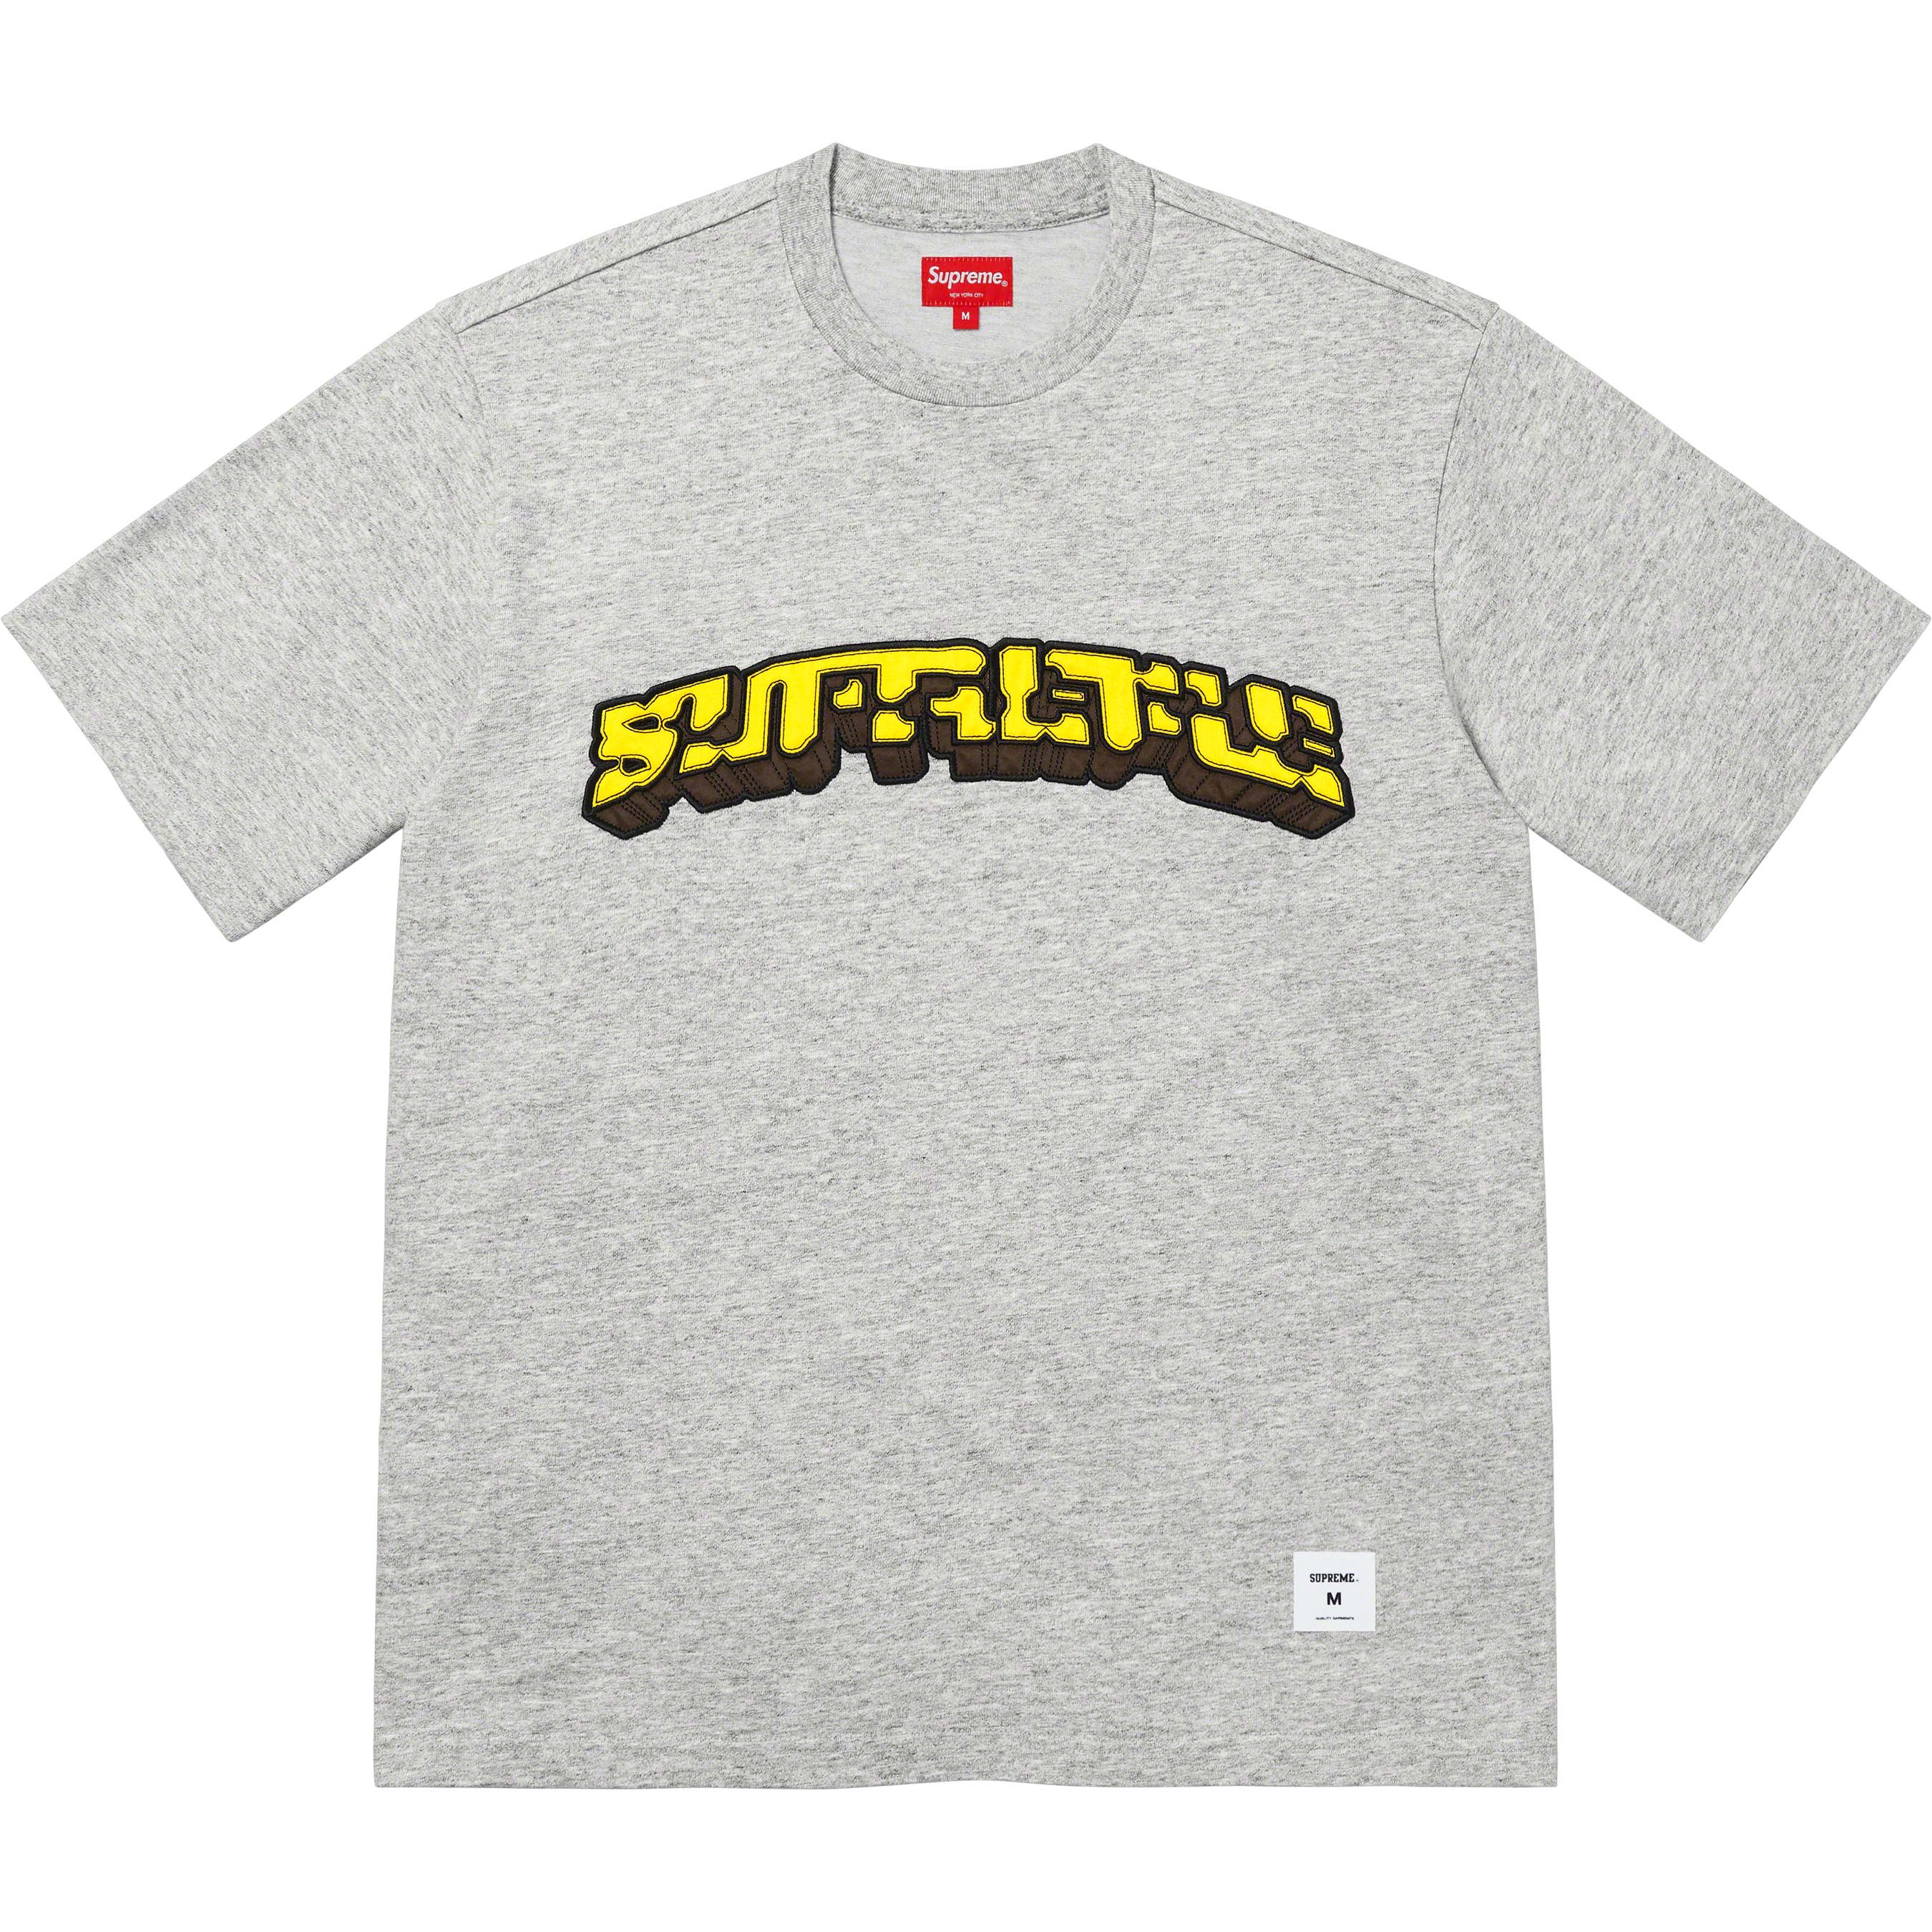 Supreme®/Umbro Jacquard Animal Print Soccer Jersey - Spring/Summer 